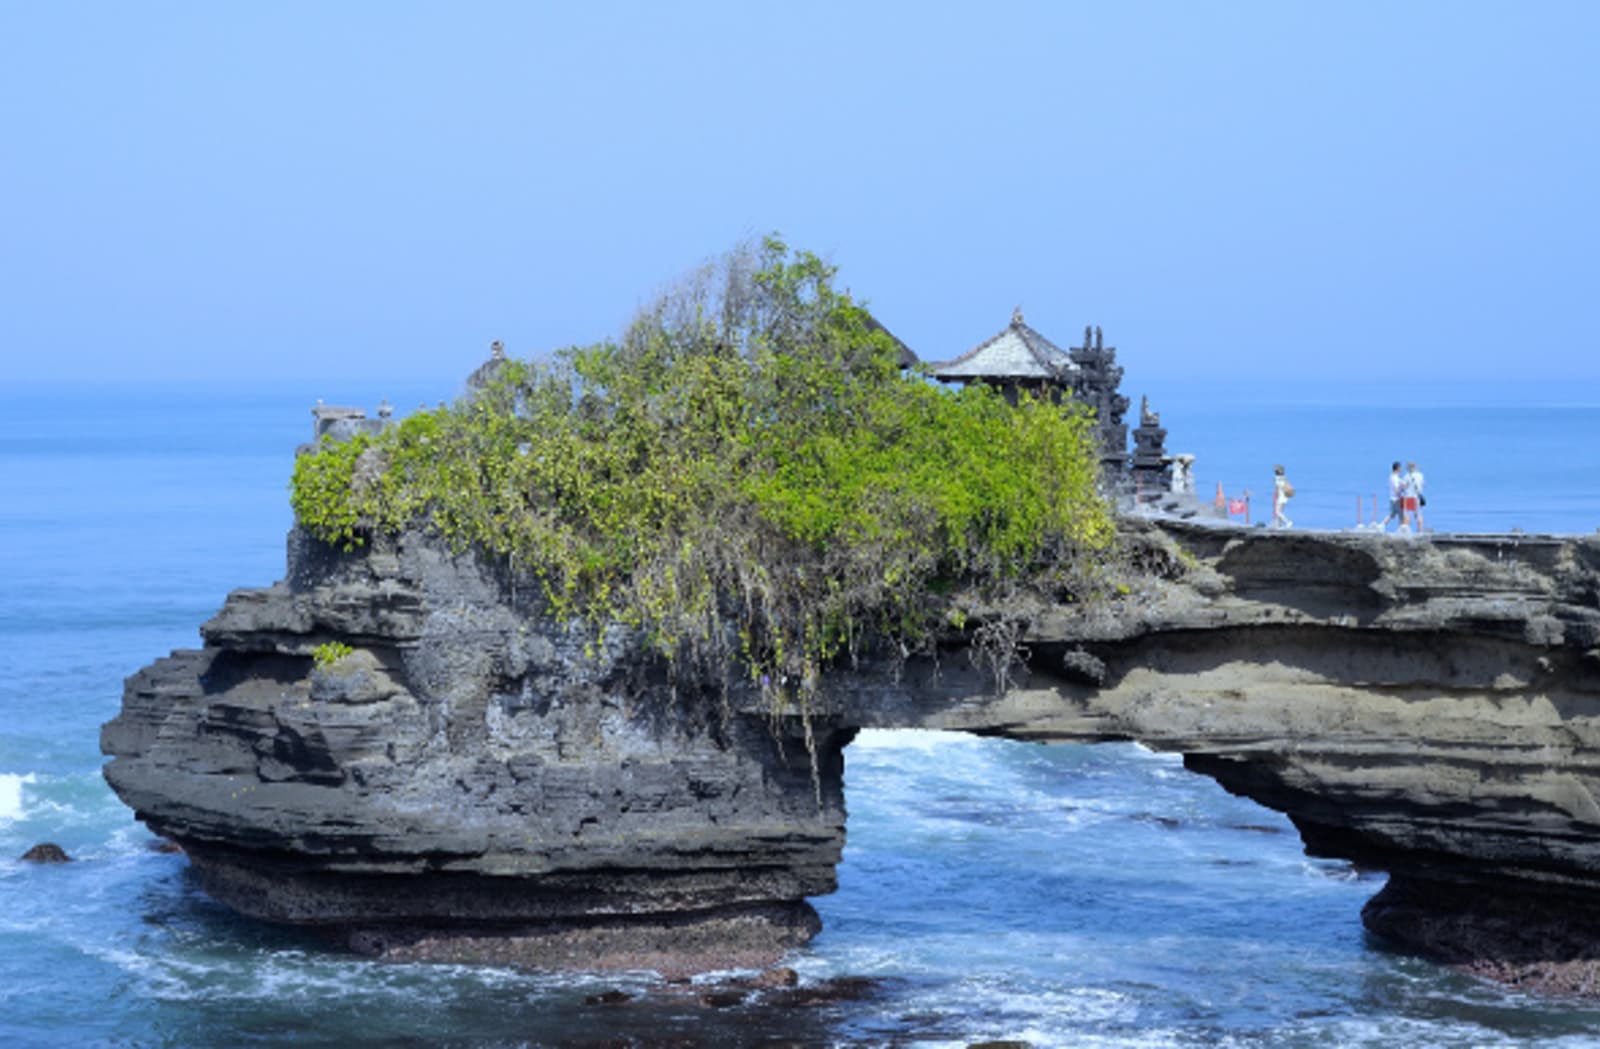 Pura Tanah Lot, perched on a shrub-covered rock at sea